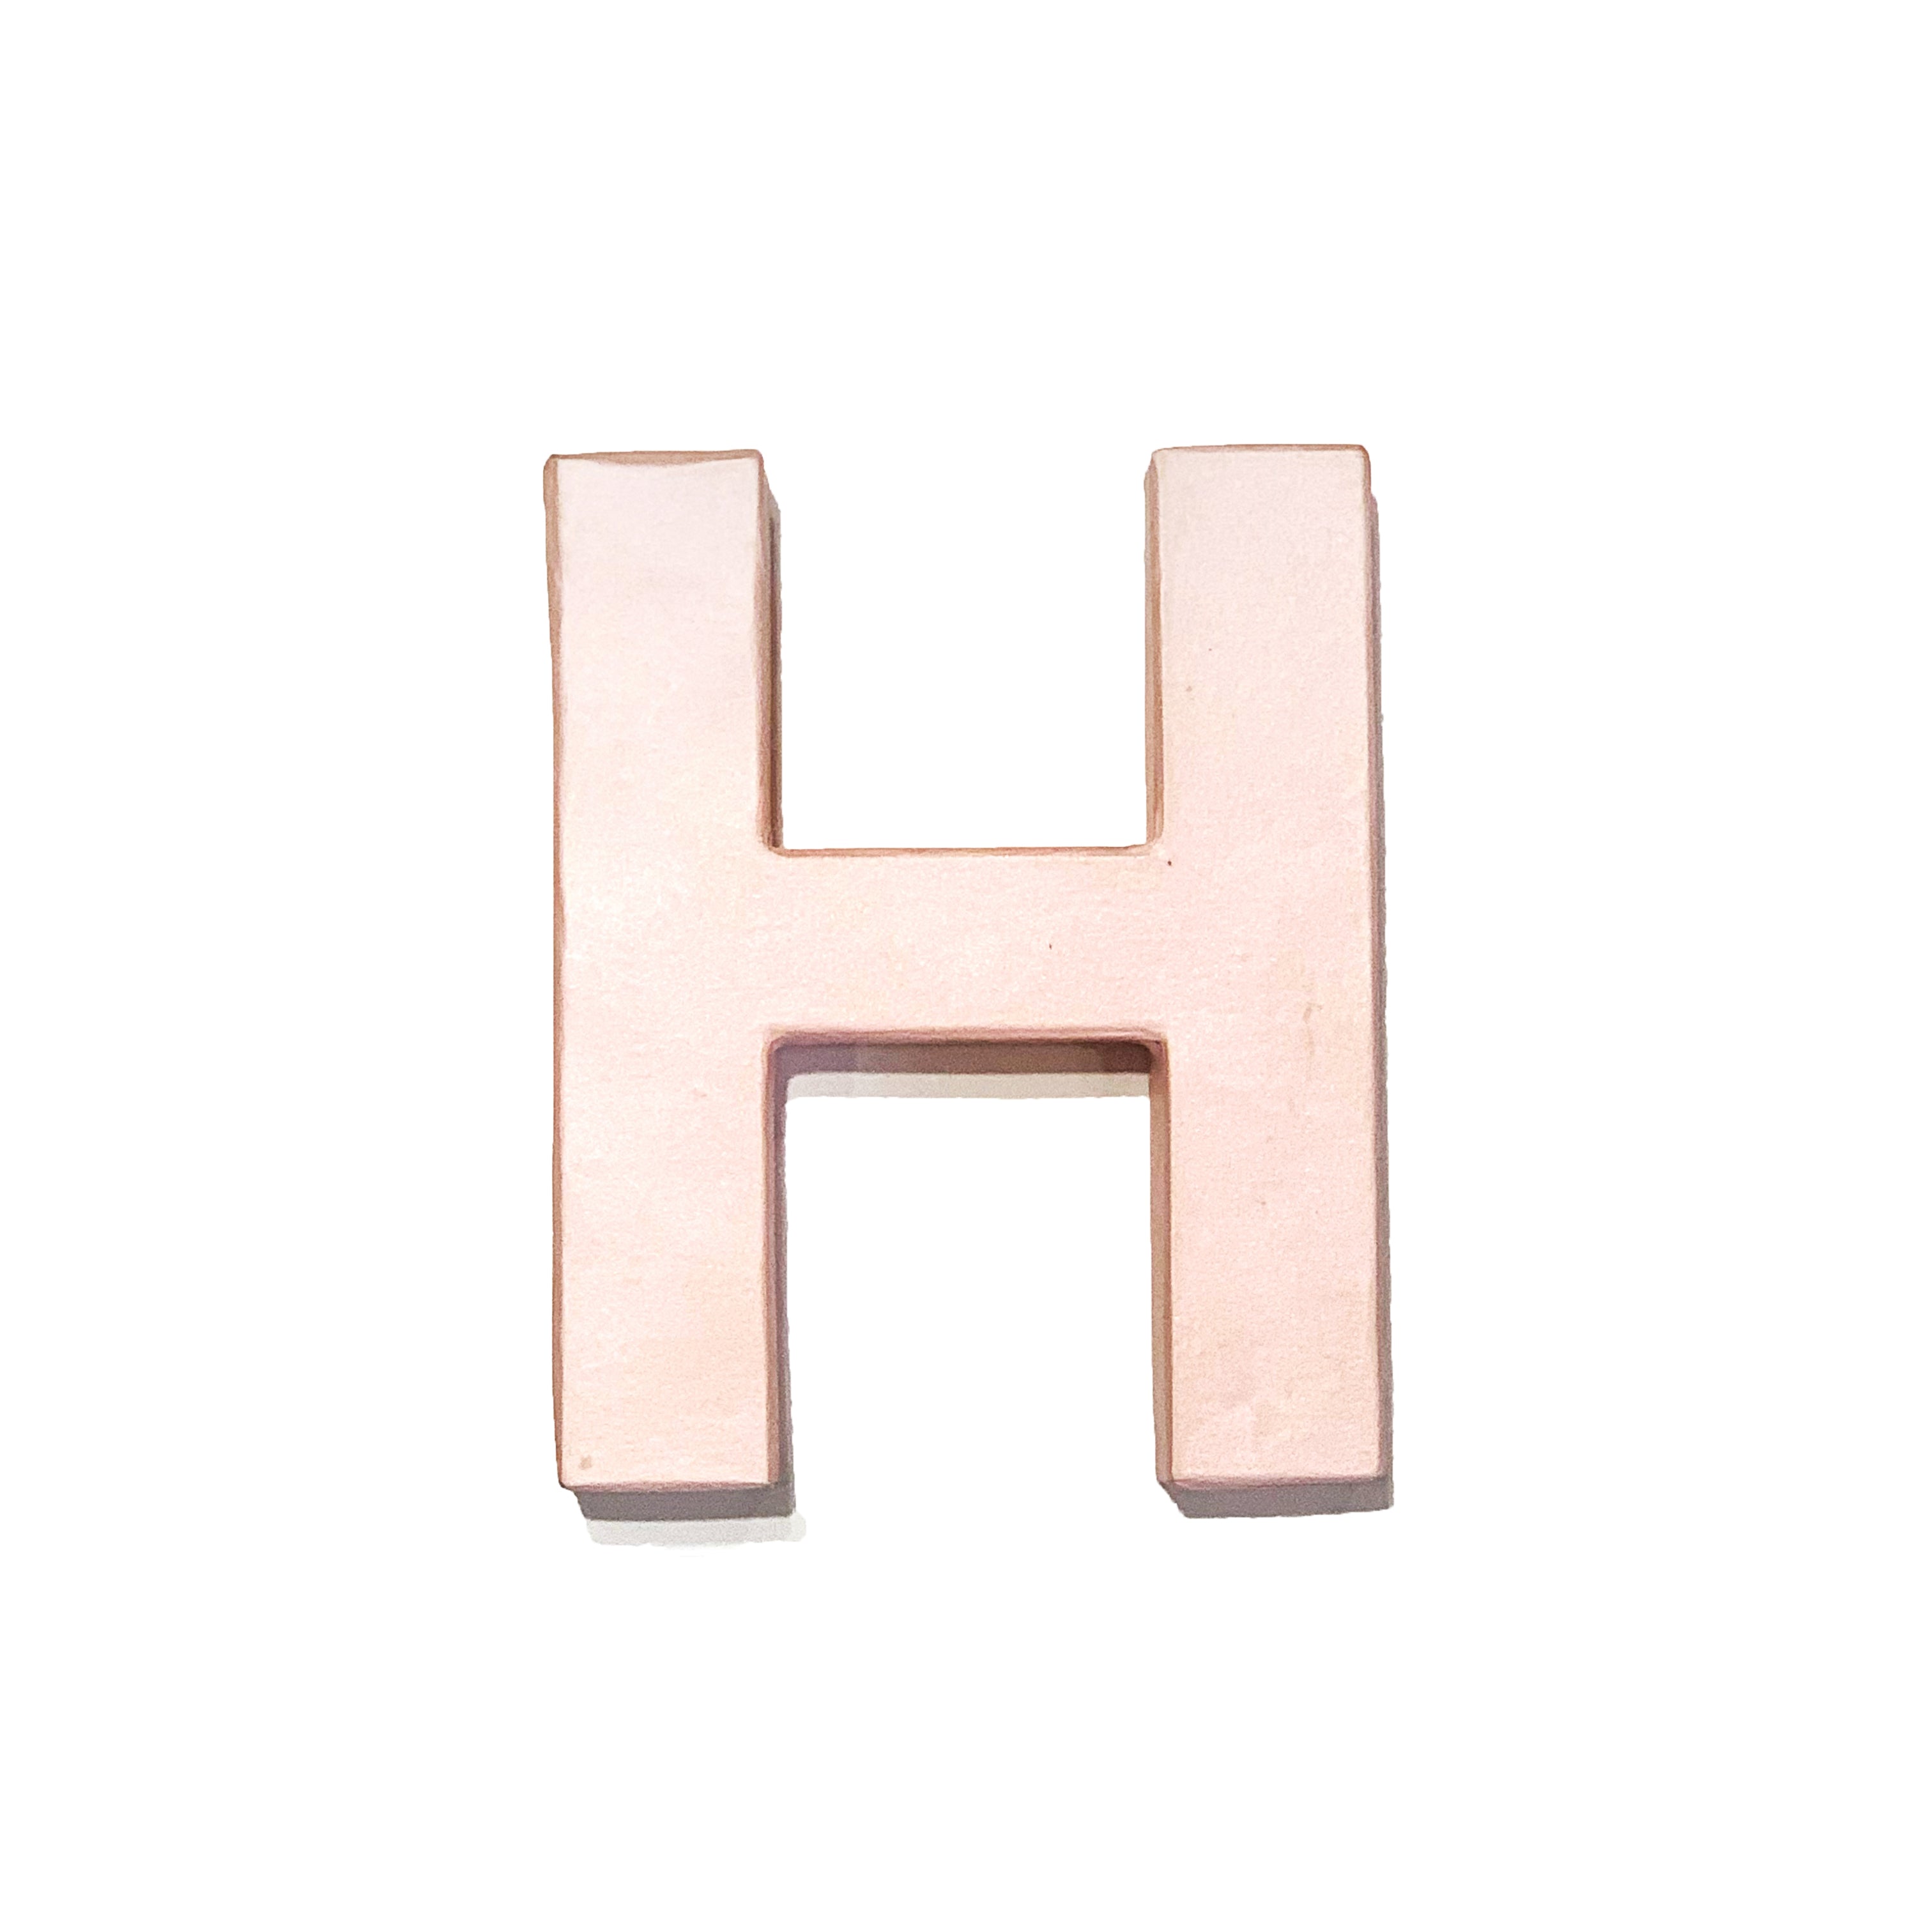 Pink Letter Blocks